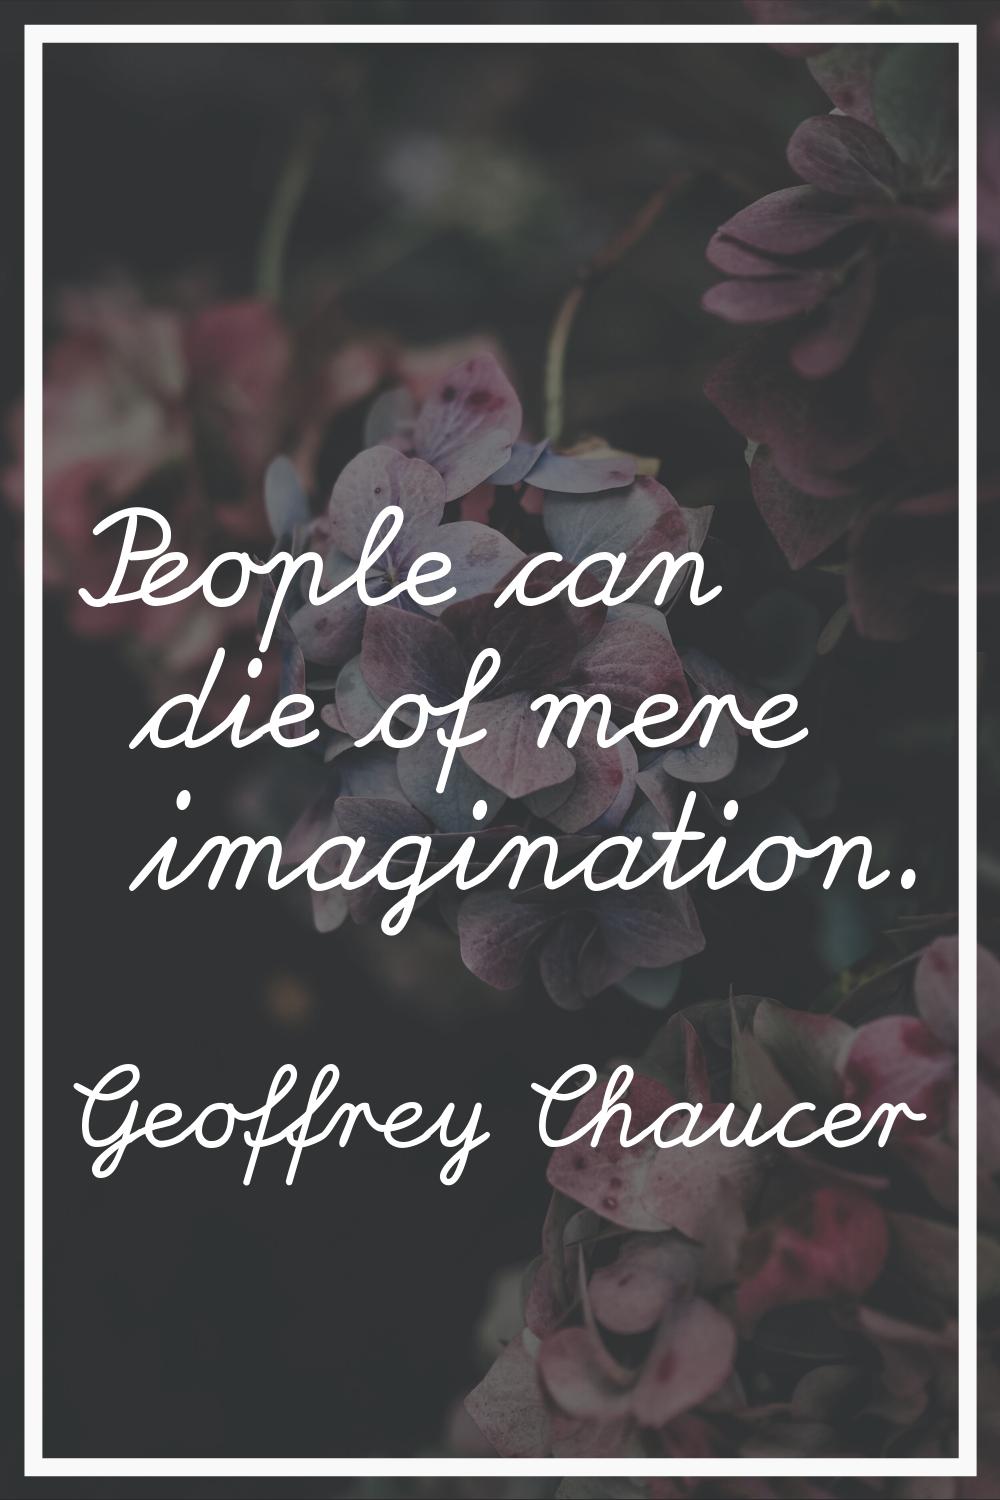 People can die of mere imagination.